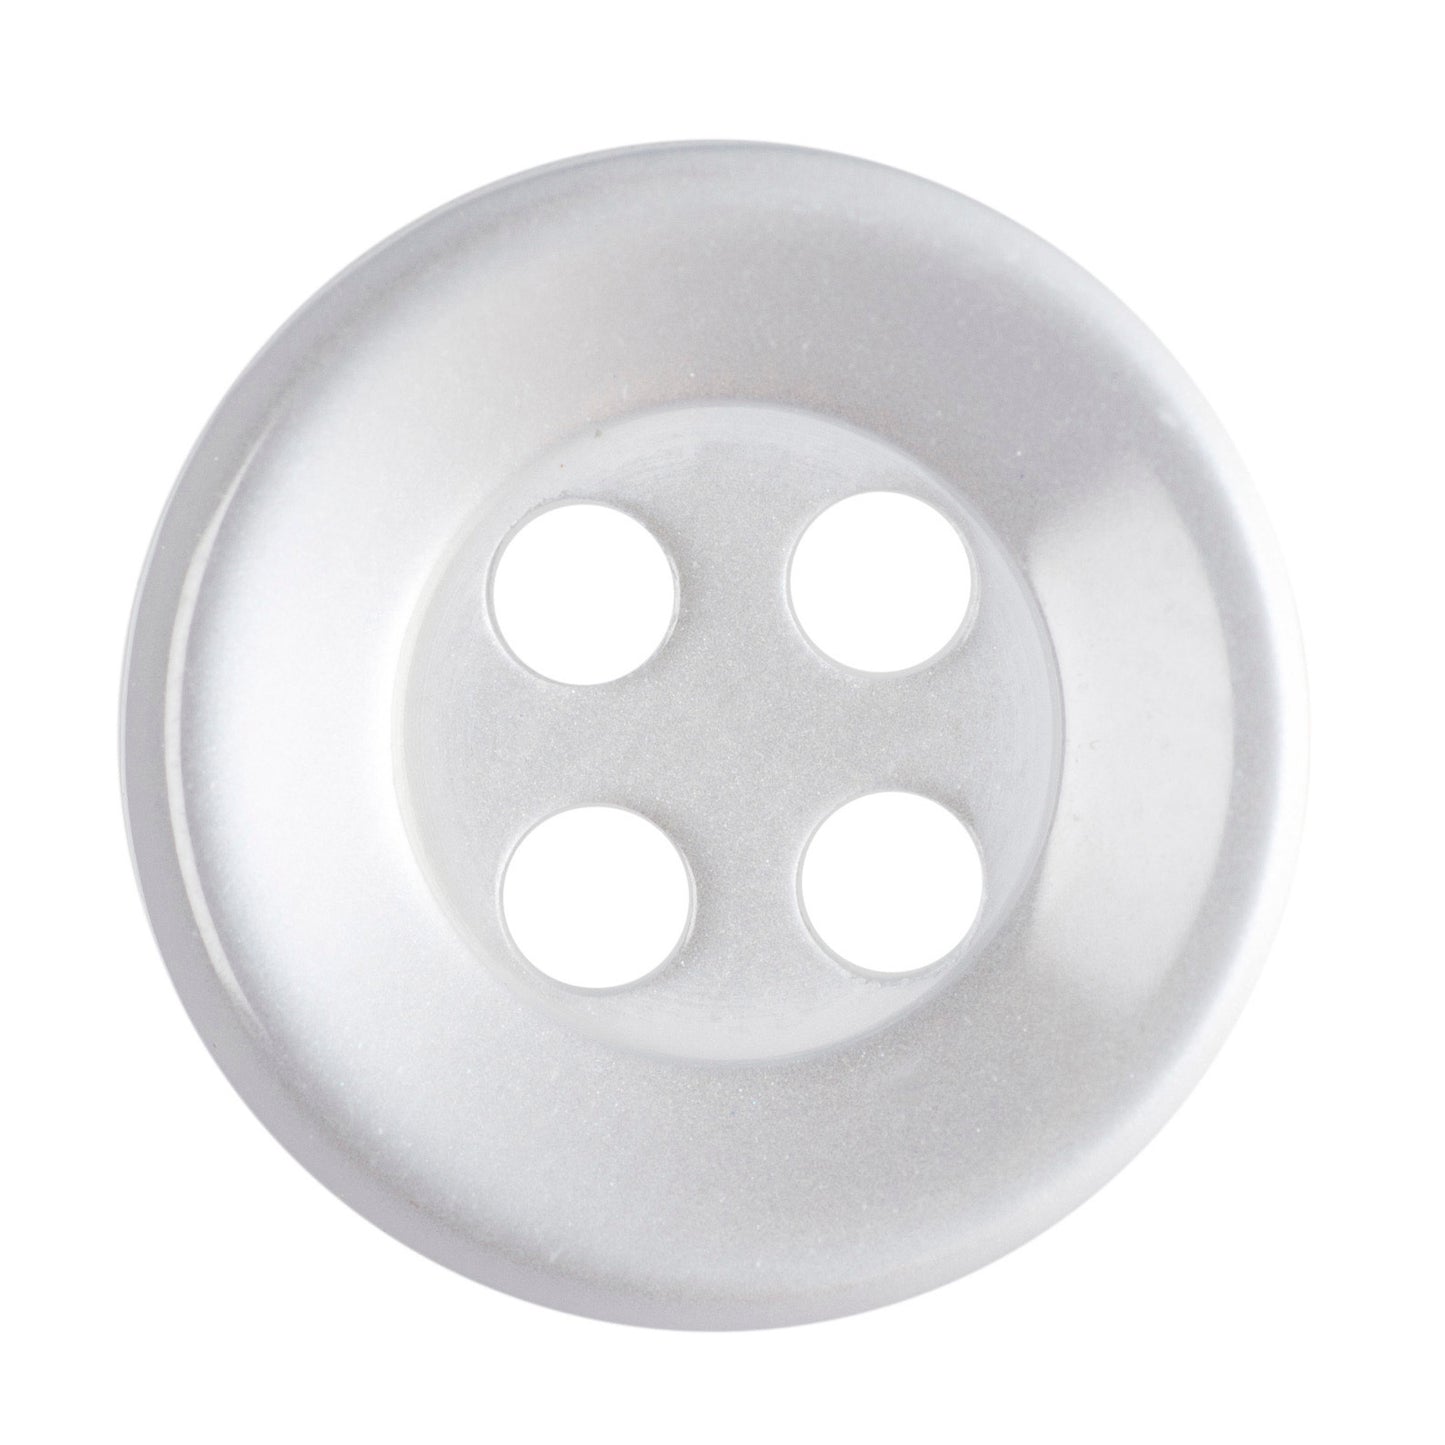 4 Hole Shirt Button - 10mm - Pearl White [LB35.6]